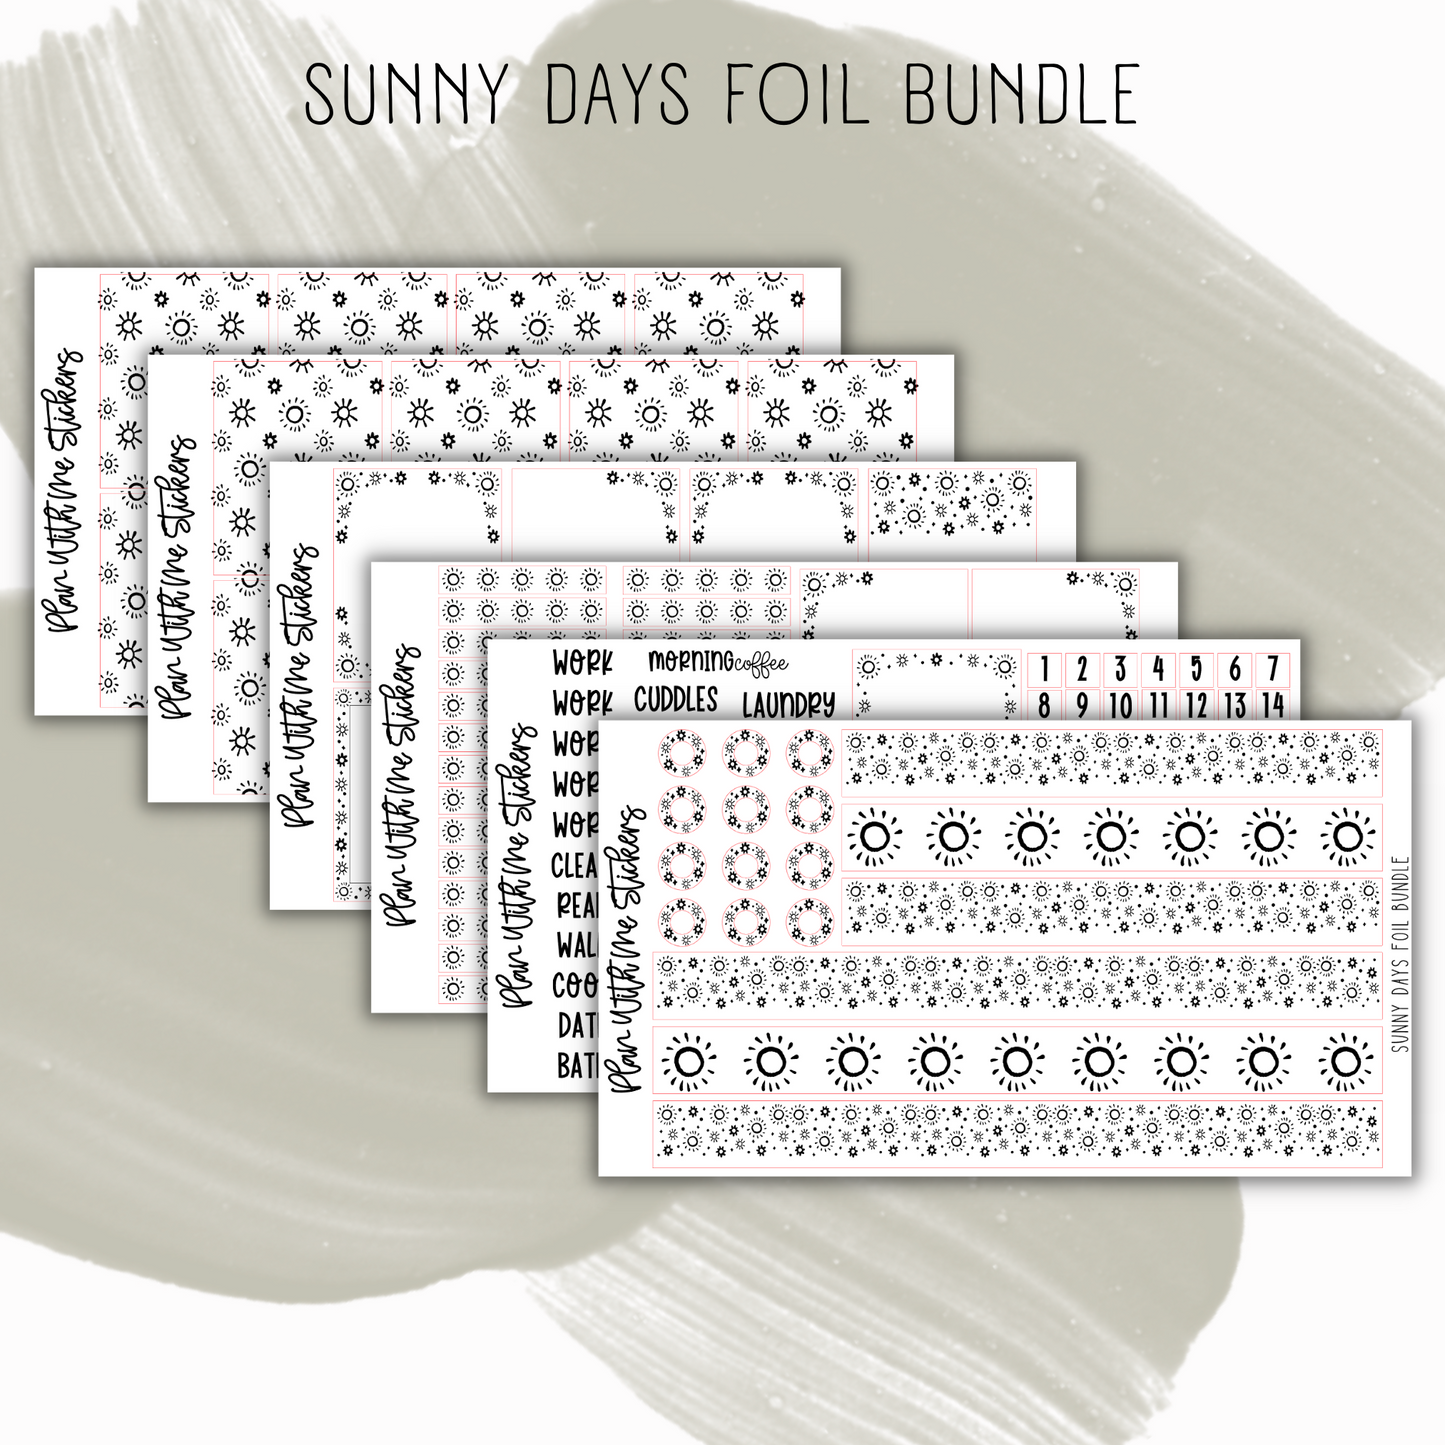 Sunny Days Foil Bundle